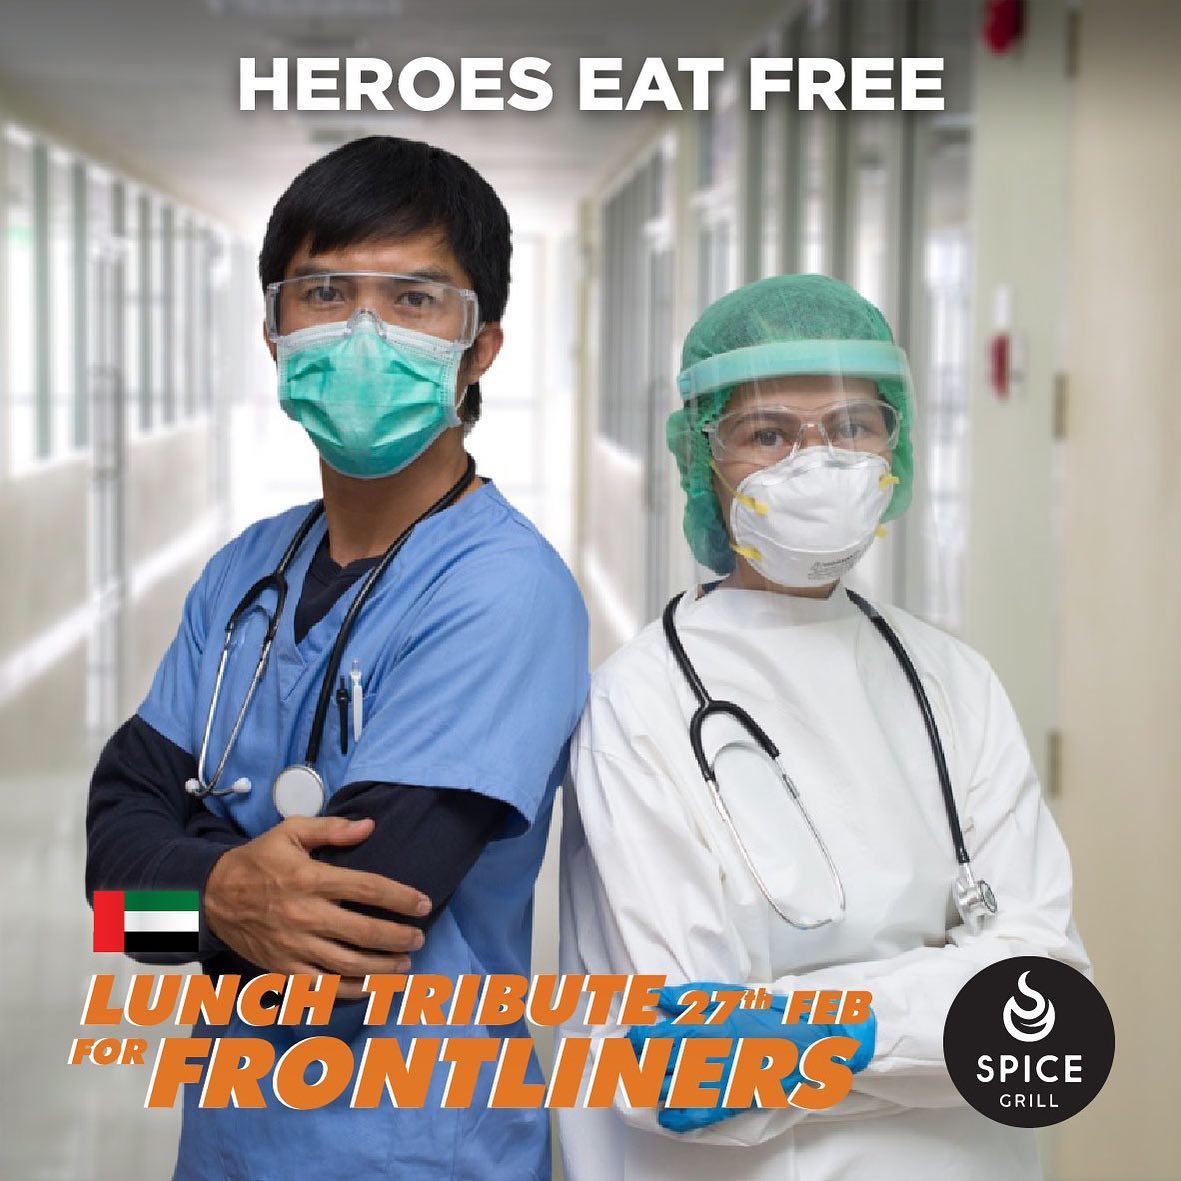 UAE frontline heroes eat free at this restaurant